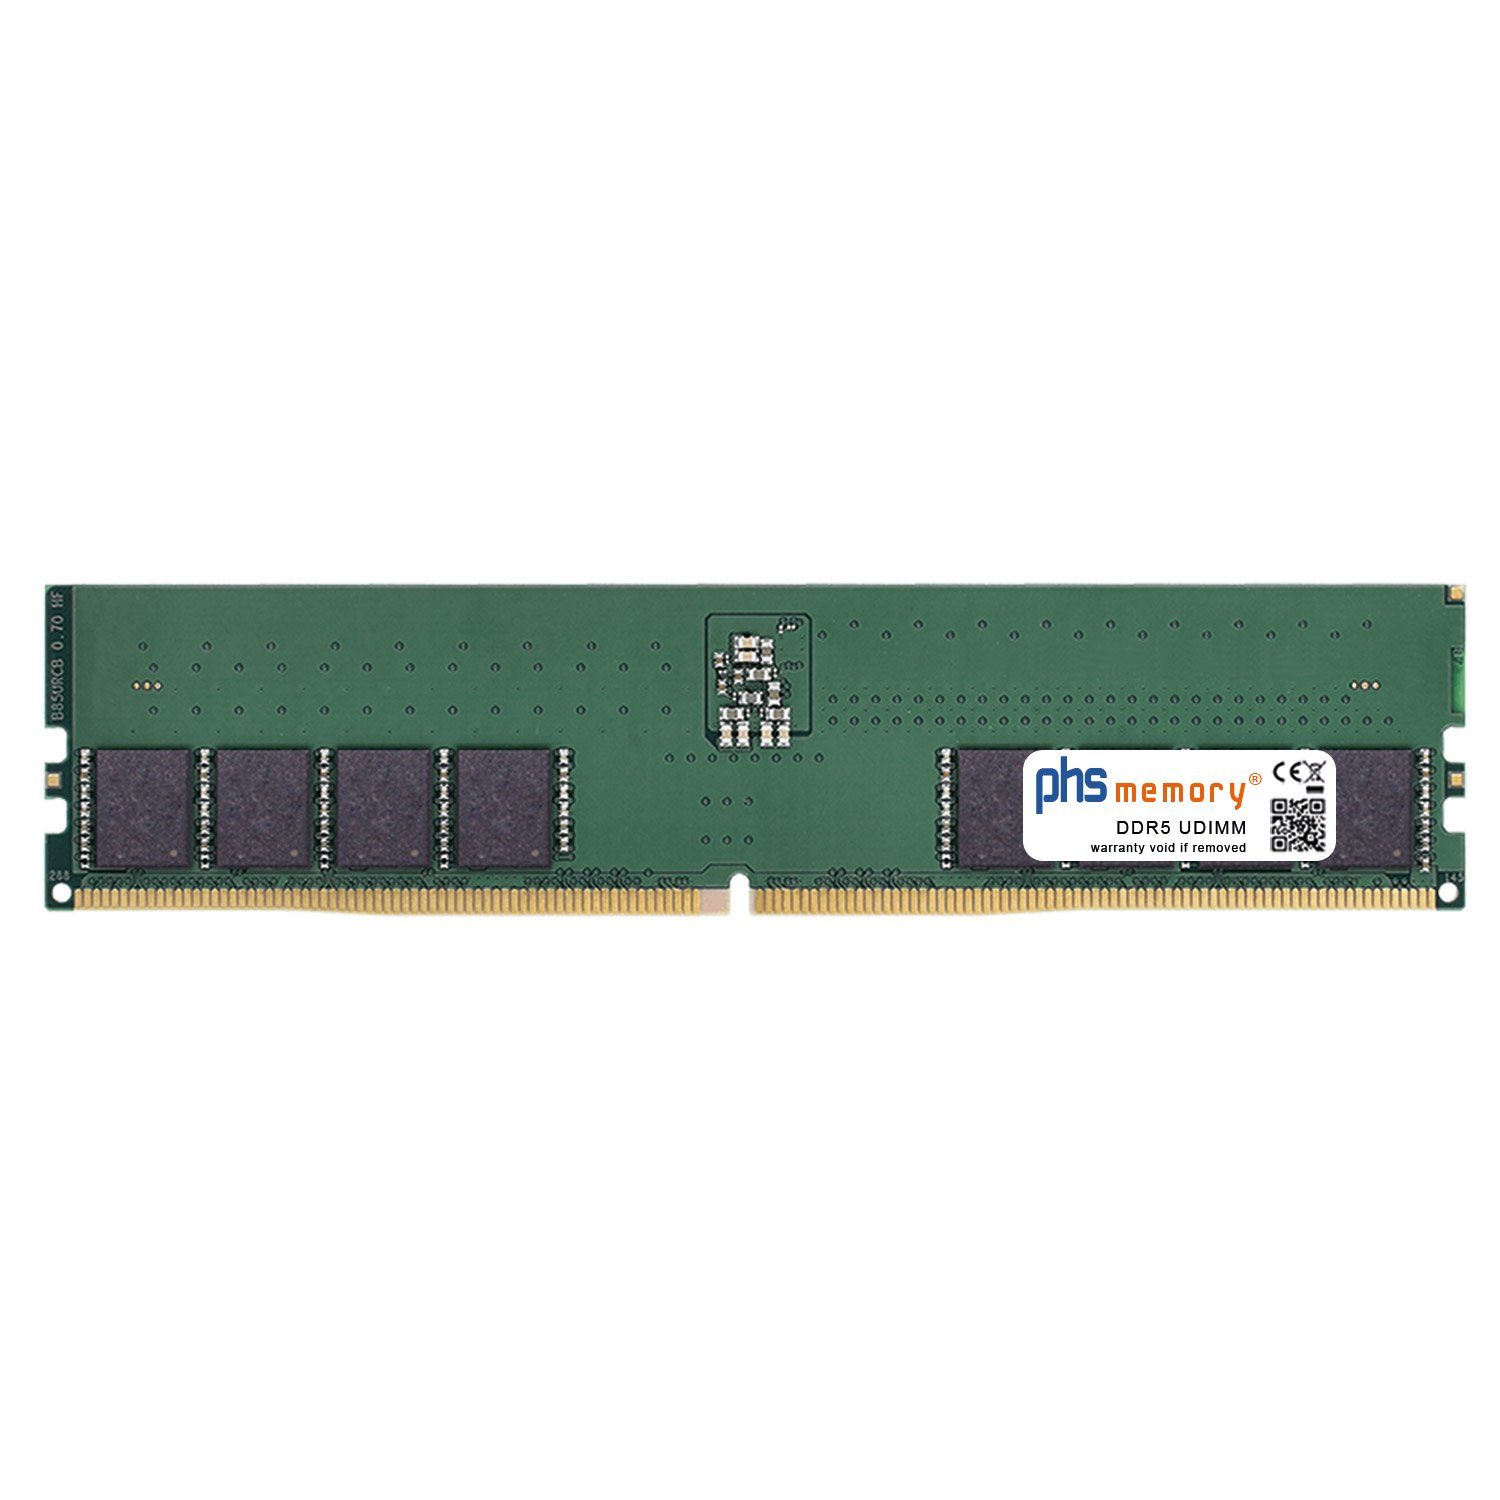 PHS-memory RAM für Captiva Ultimate Gaming I67-832 Arbeitsspeicher